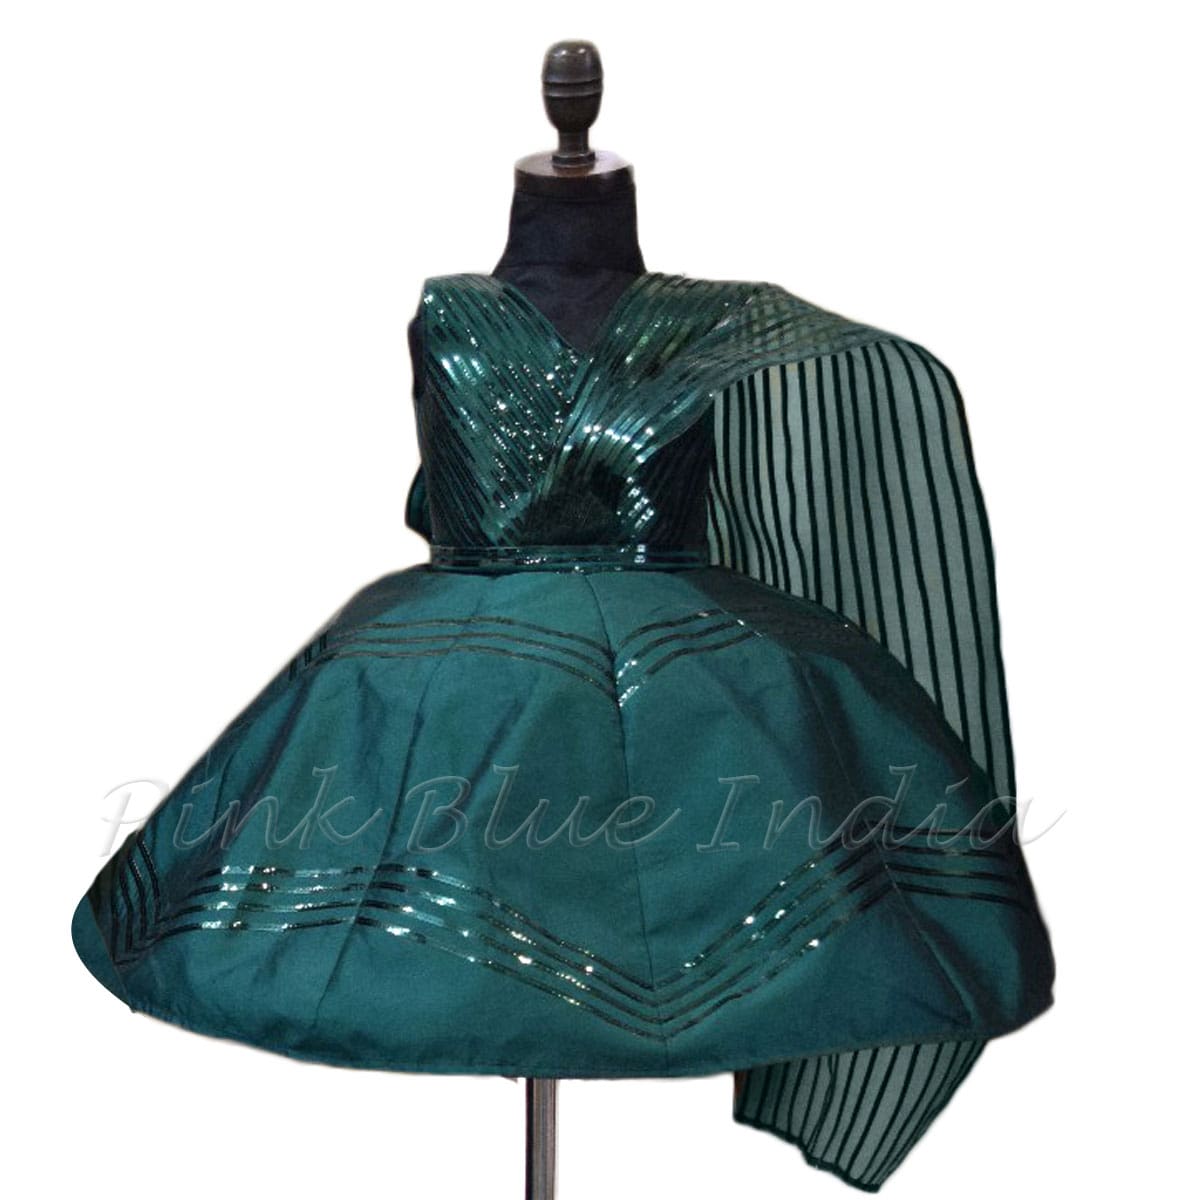 2,900+ Maxi Dress Stock Photos, Pictures & Royalty-Free Images - iStock |  Summer maxi dress, Maxi dress fashion, Floral maxi dress